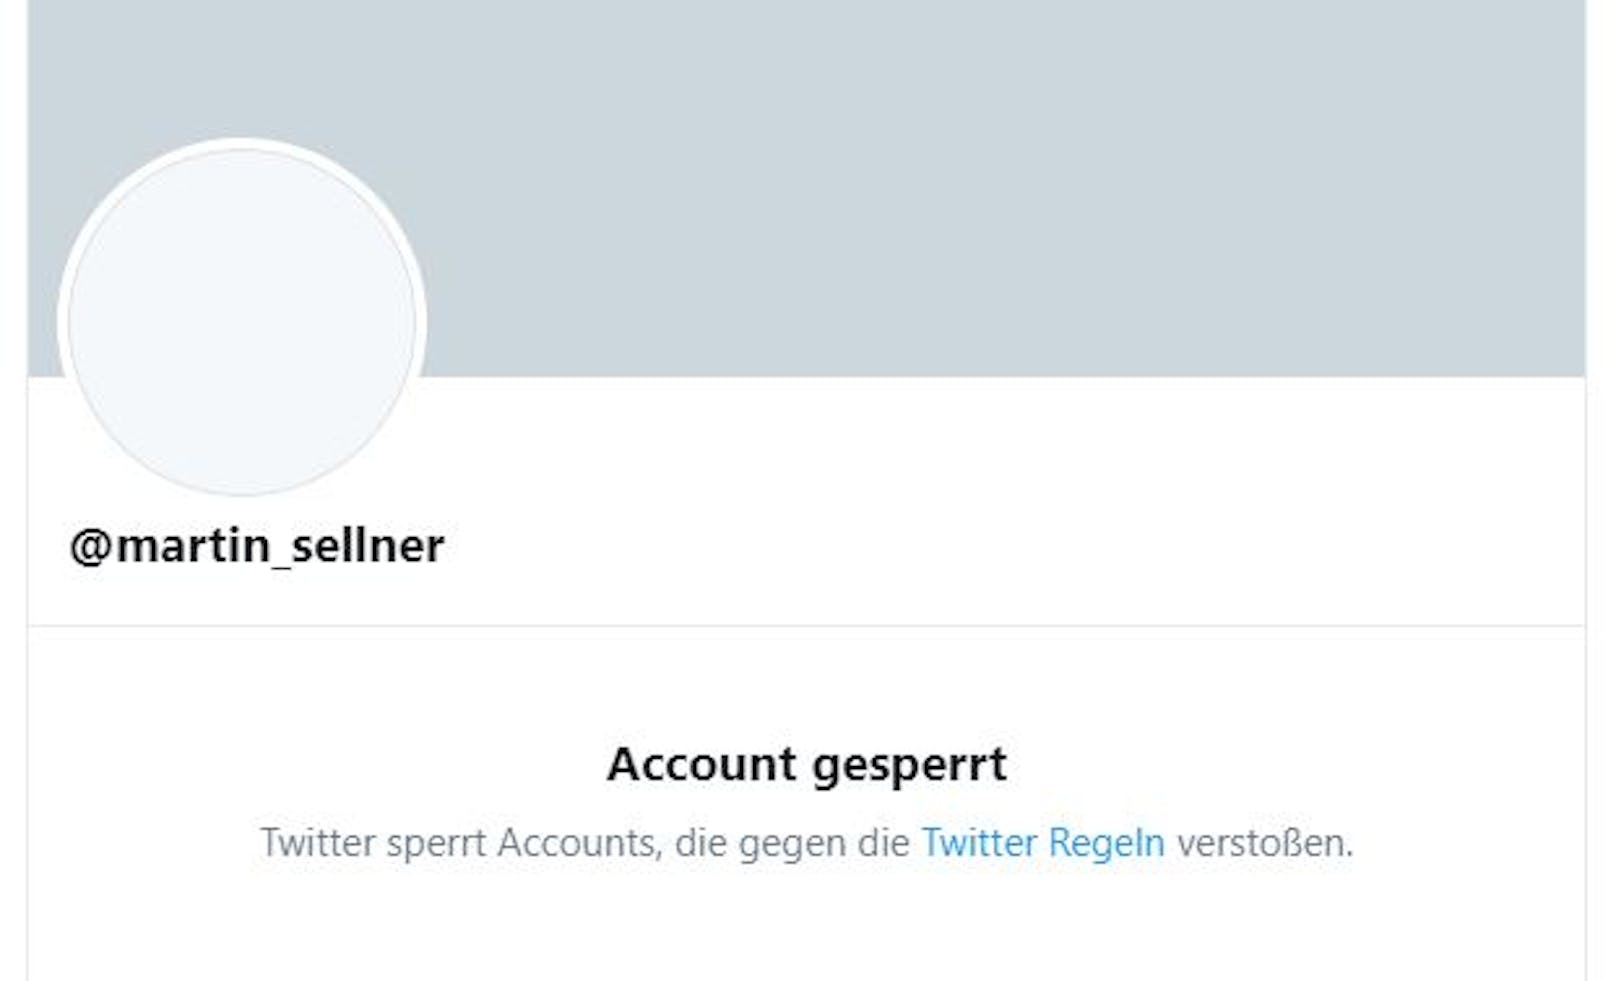 Martin Sellners Twitter-Account wurde gesperrt.